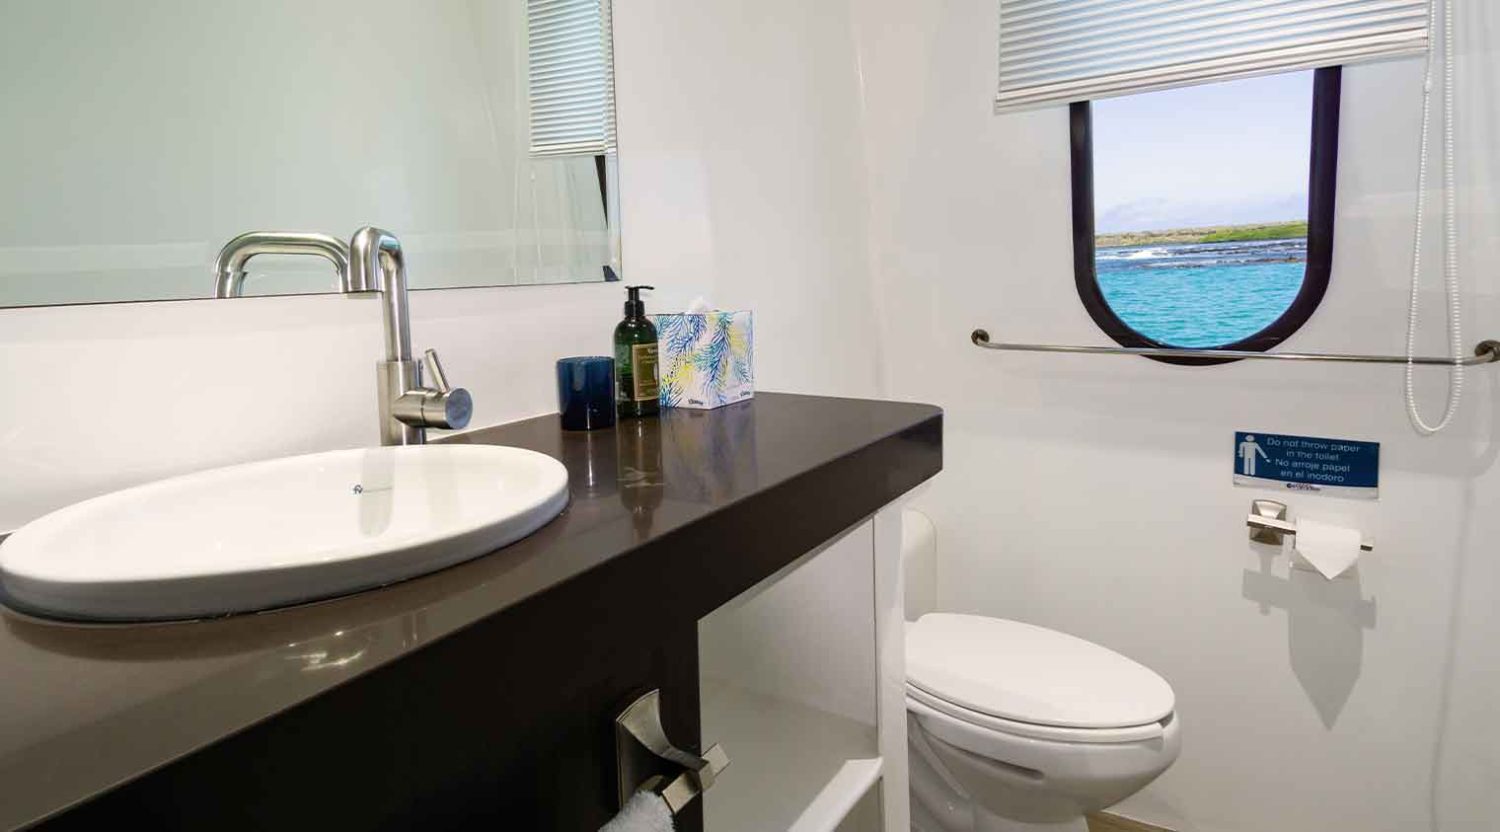 Natural Paradise Yacht bathroom of galapagos islands tours